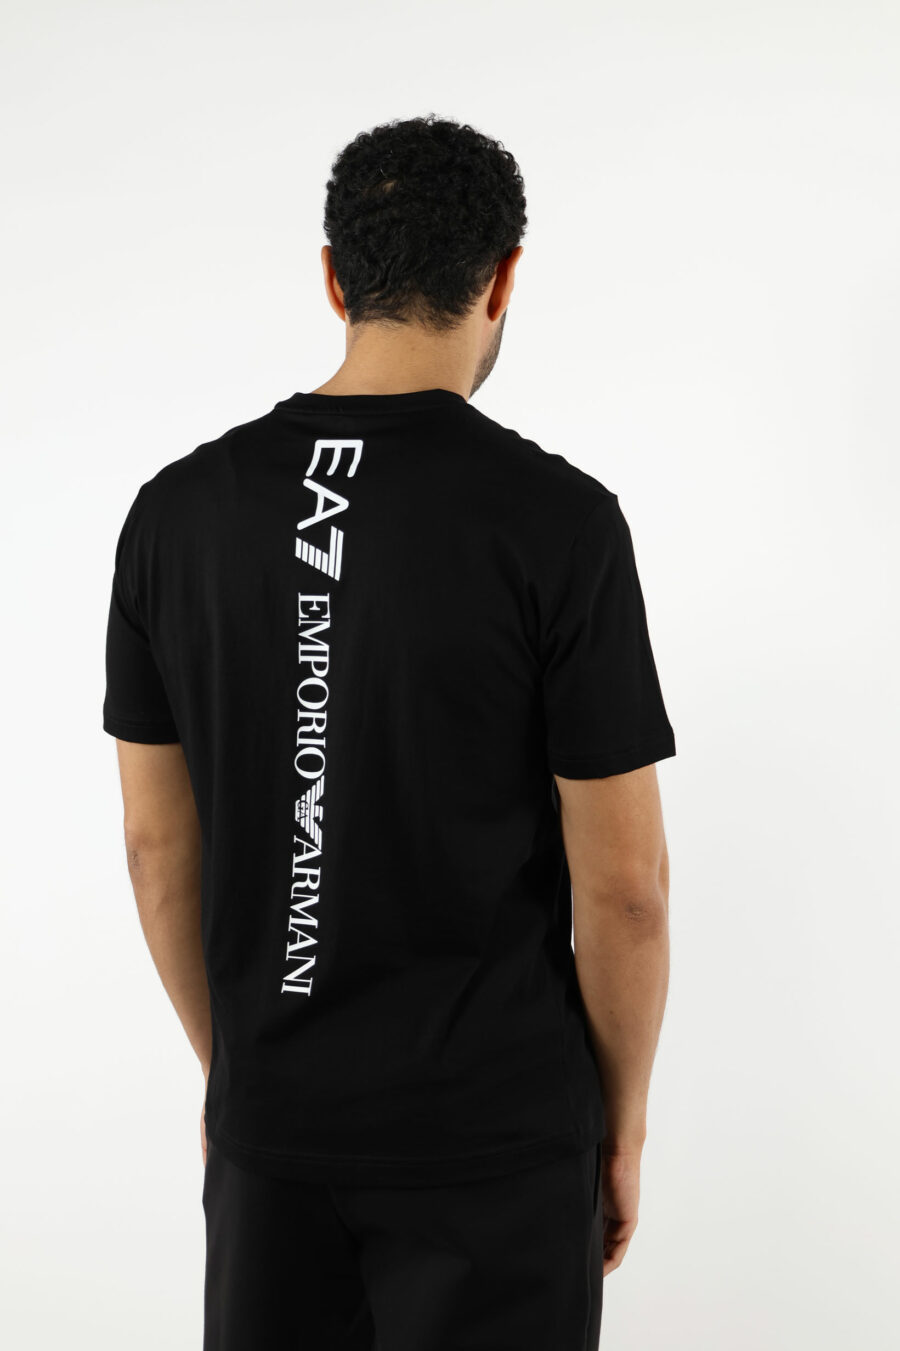 Schwarzes T-Shirt mit vertikalem "lux identity" Maxilogo auf dem Rücken - 110887